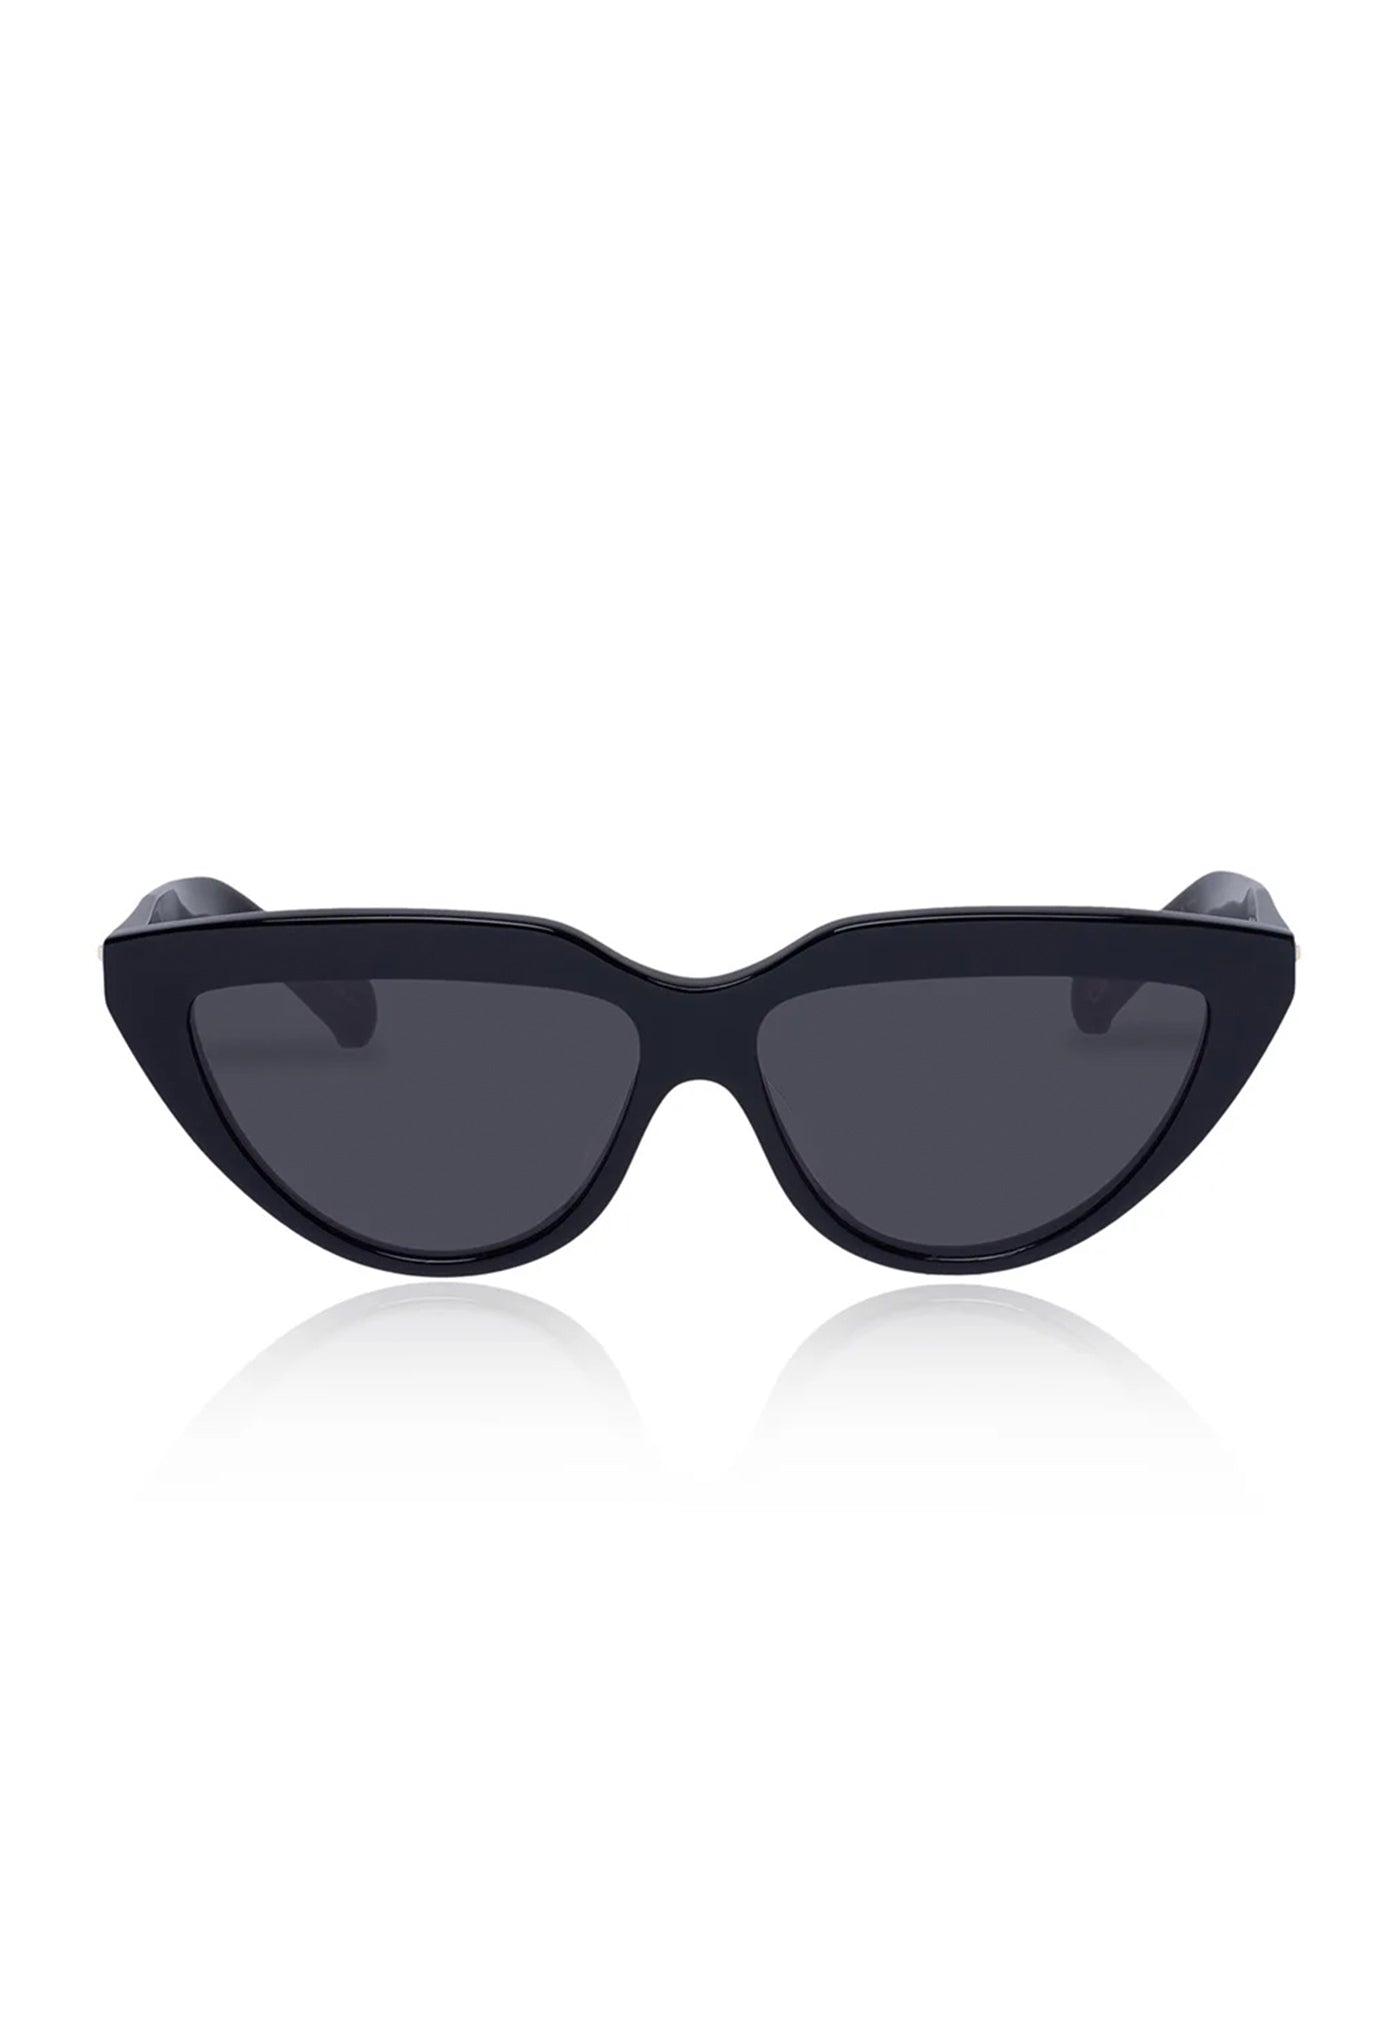 Lash Splash Sunglasses - Black sold by Angel Divine